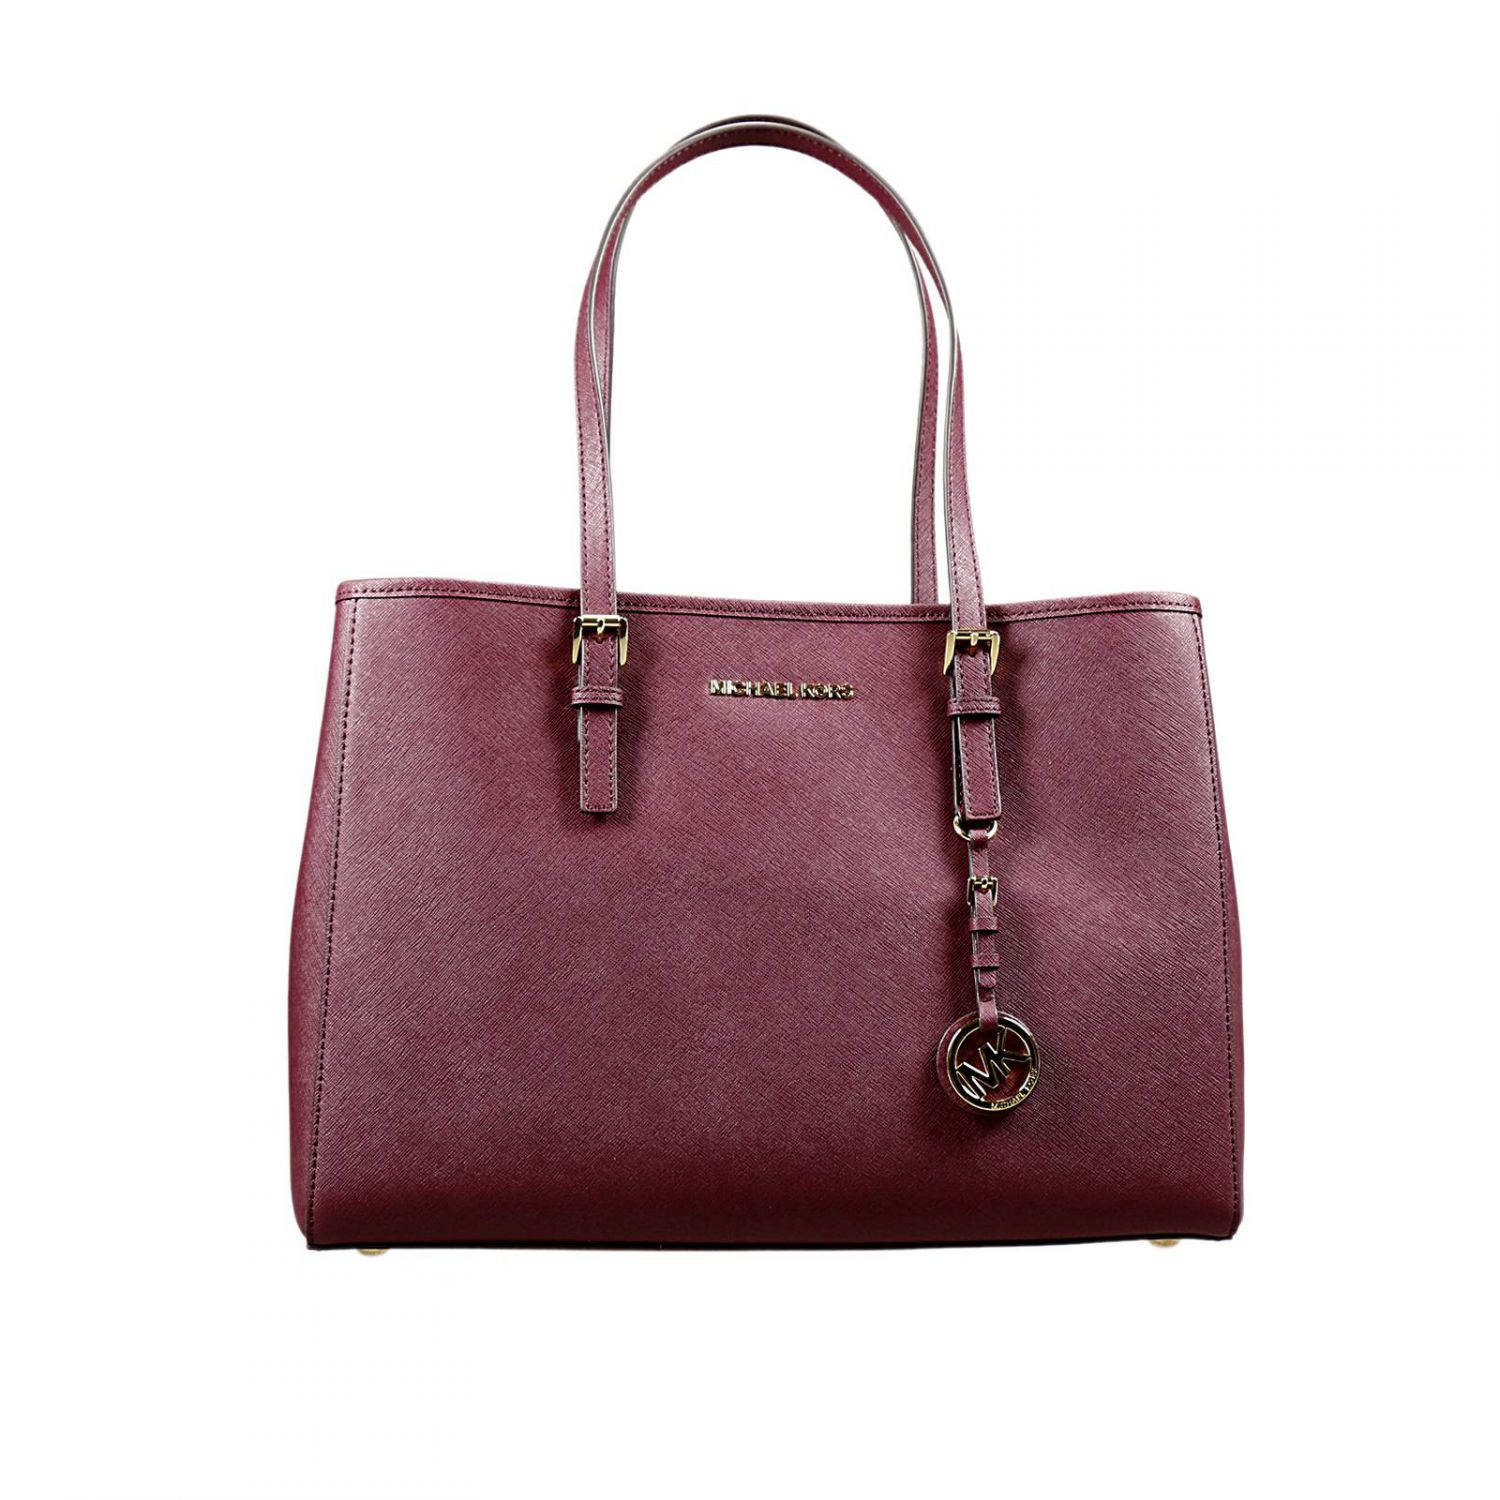 Lyst - Michael Michael Kors Handbag in Purple